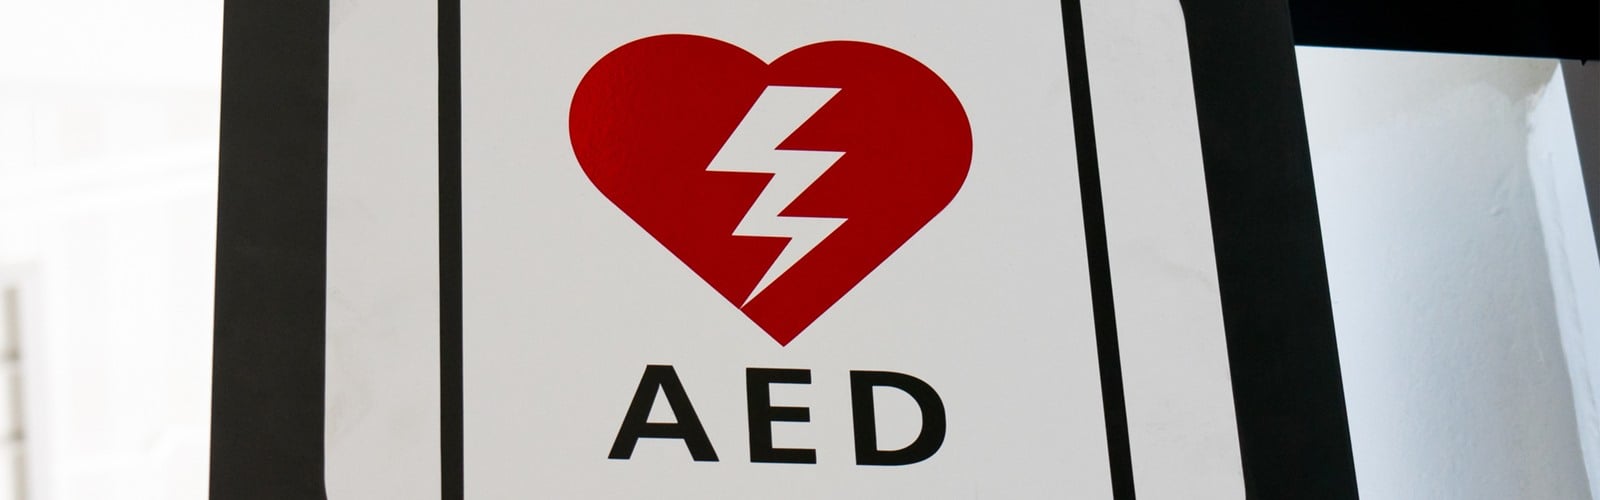 heart defibrilator,aed defibrillator,cardiac arrest,defibrillator device,heart rhythm